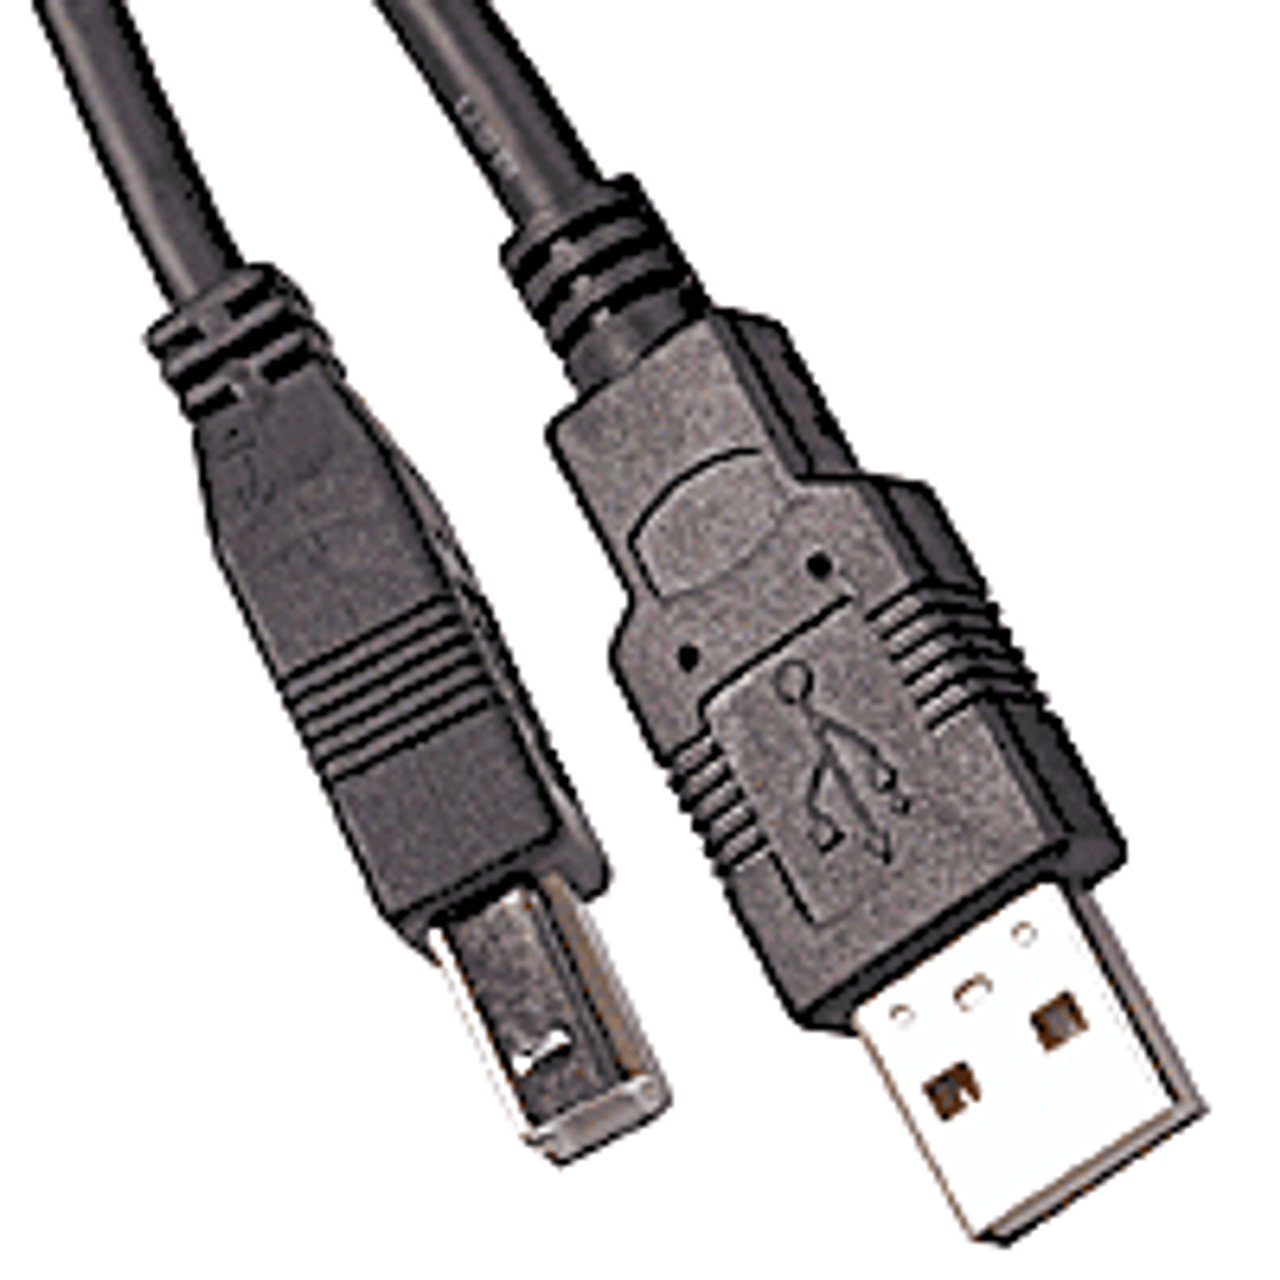 Cable USB A / USB B 5m AK-USB-18